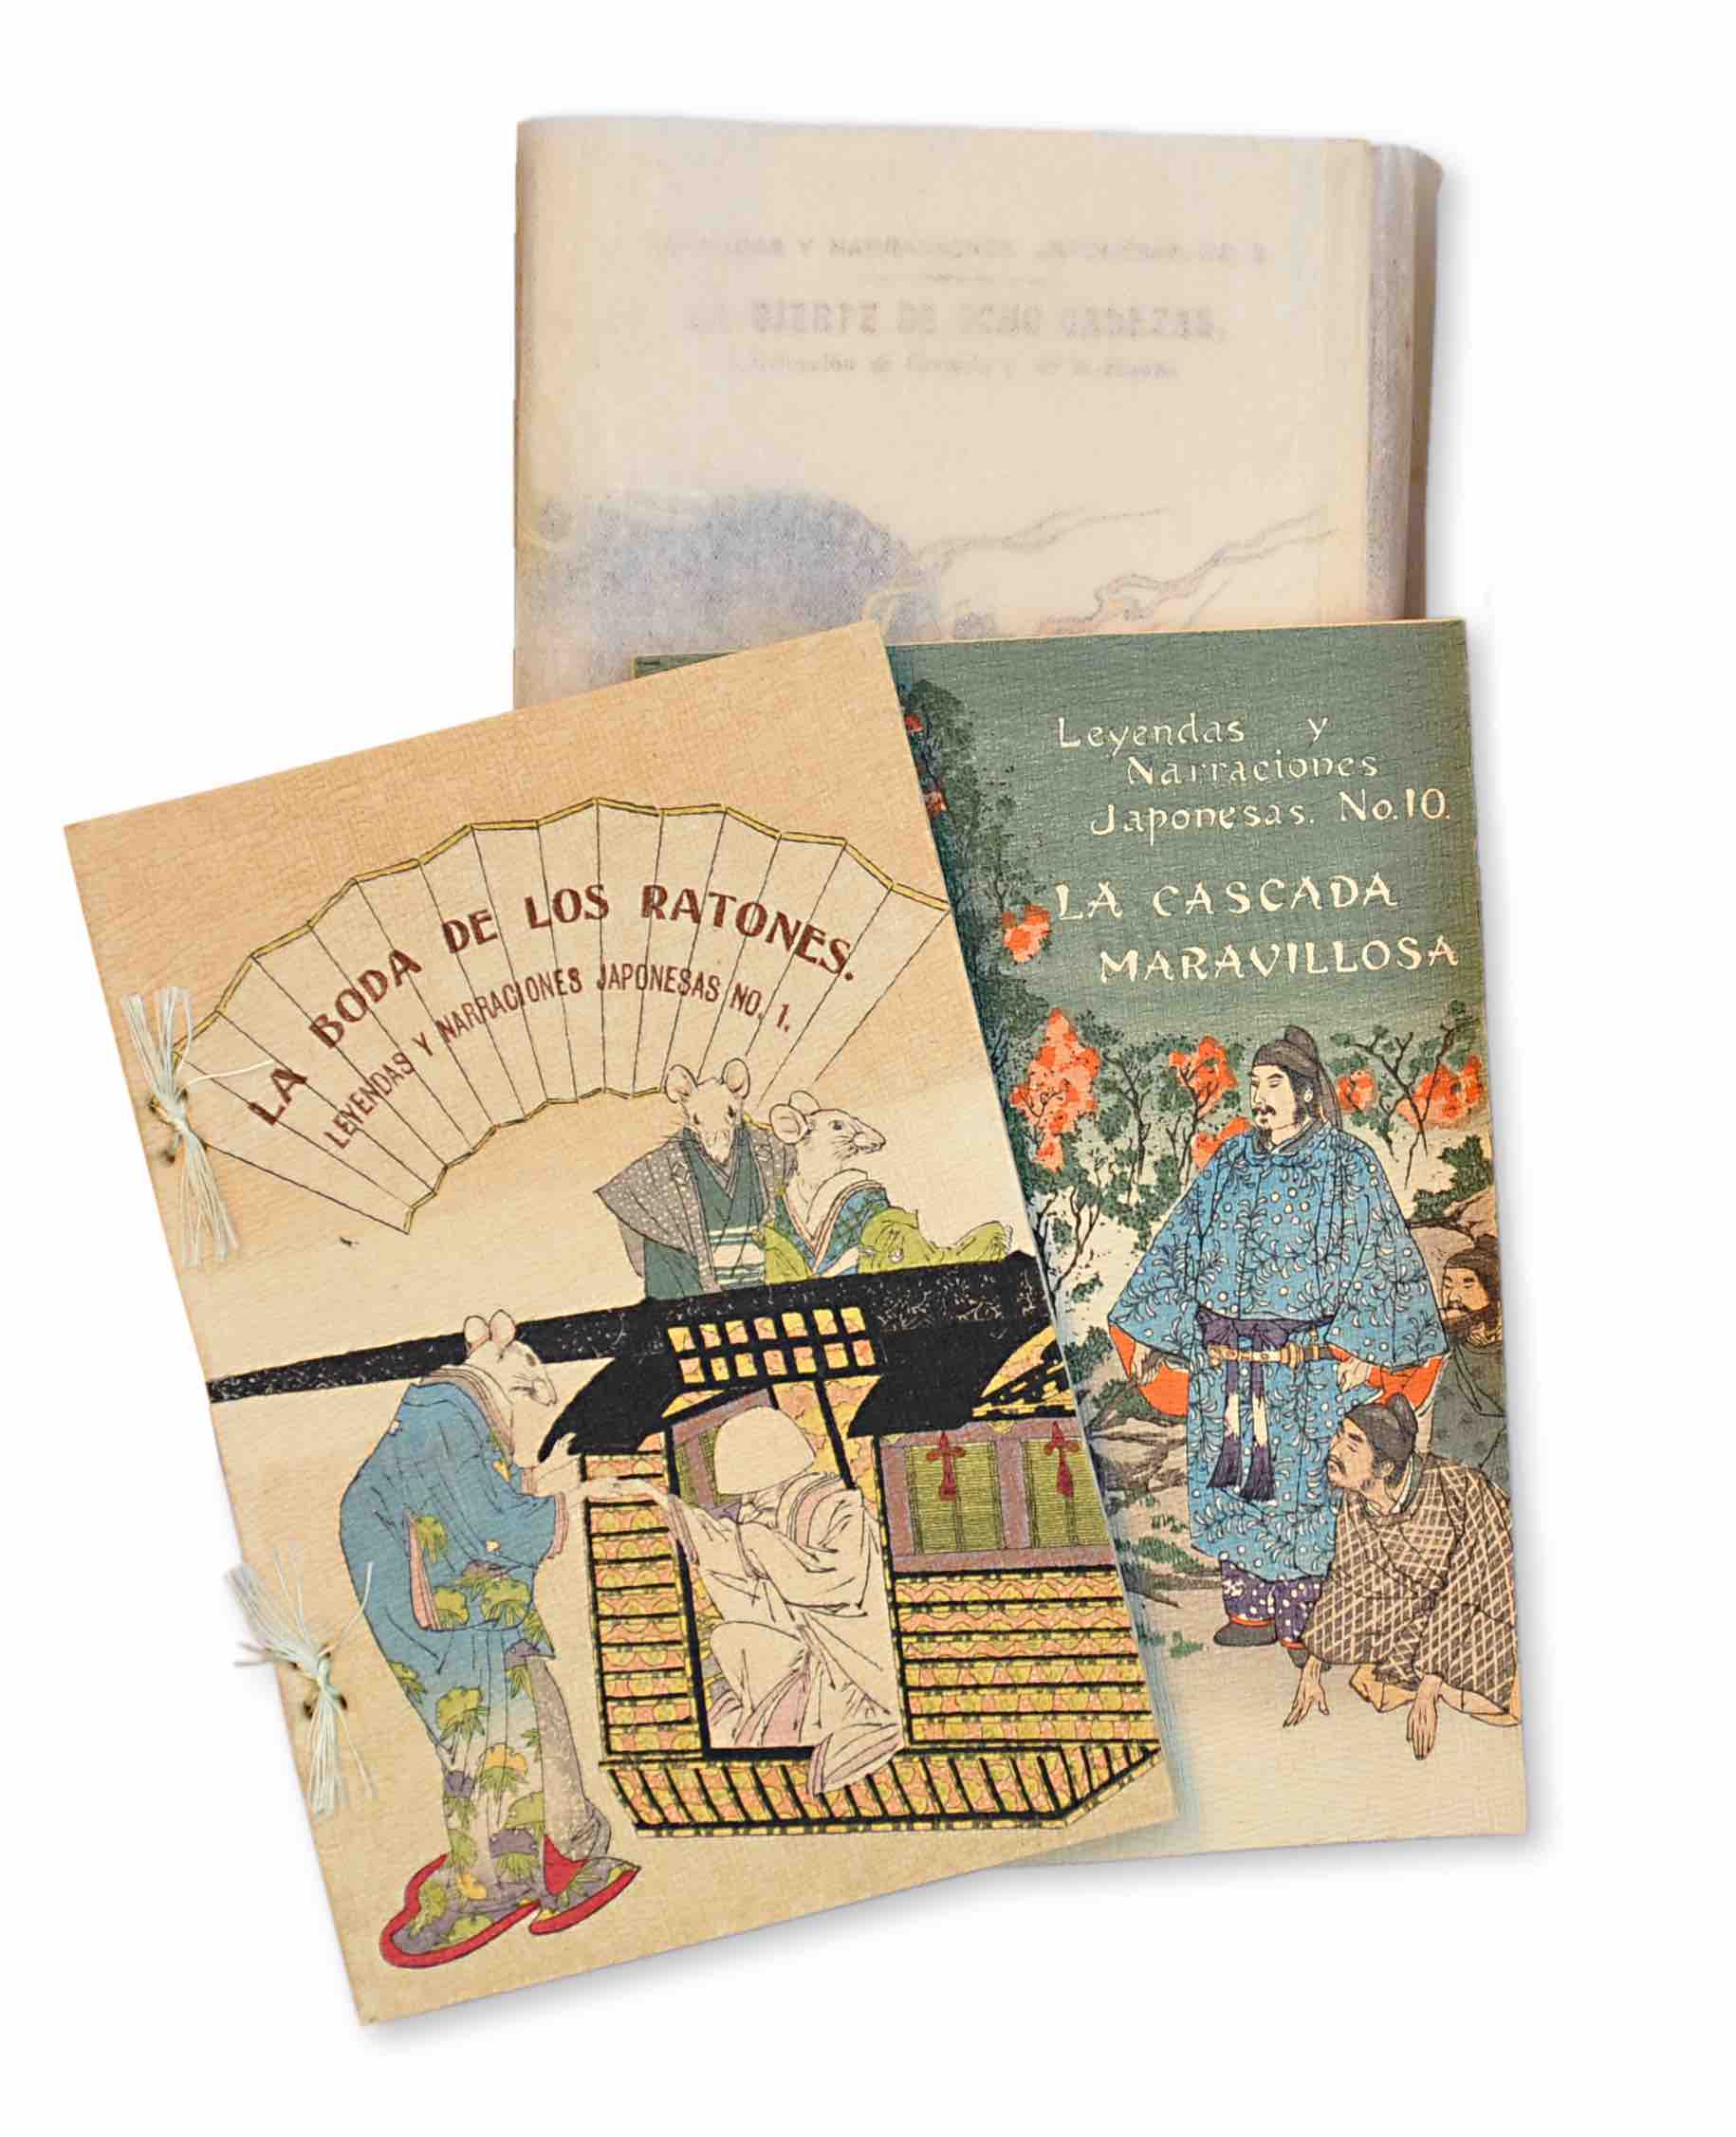 GONZALO JIMNEZ DE LA ESPADA (Transl.) / HASEGAWA,TAKEJIR (Ed.): -  Leyendas y Narraciones Japonesas. [A Collection of Japanese Fairy Tales in Spanish]. Ten volumes. Tokyo, Hasegawa, Taisho 3 (1914).